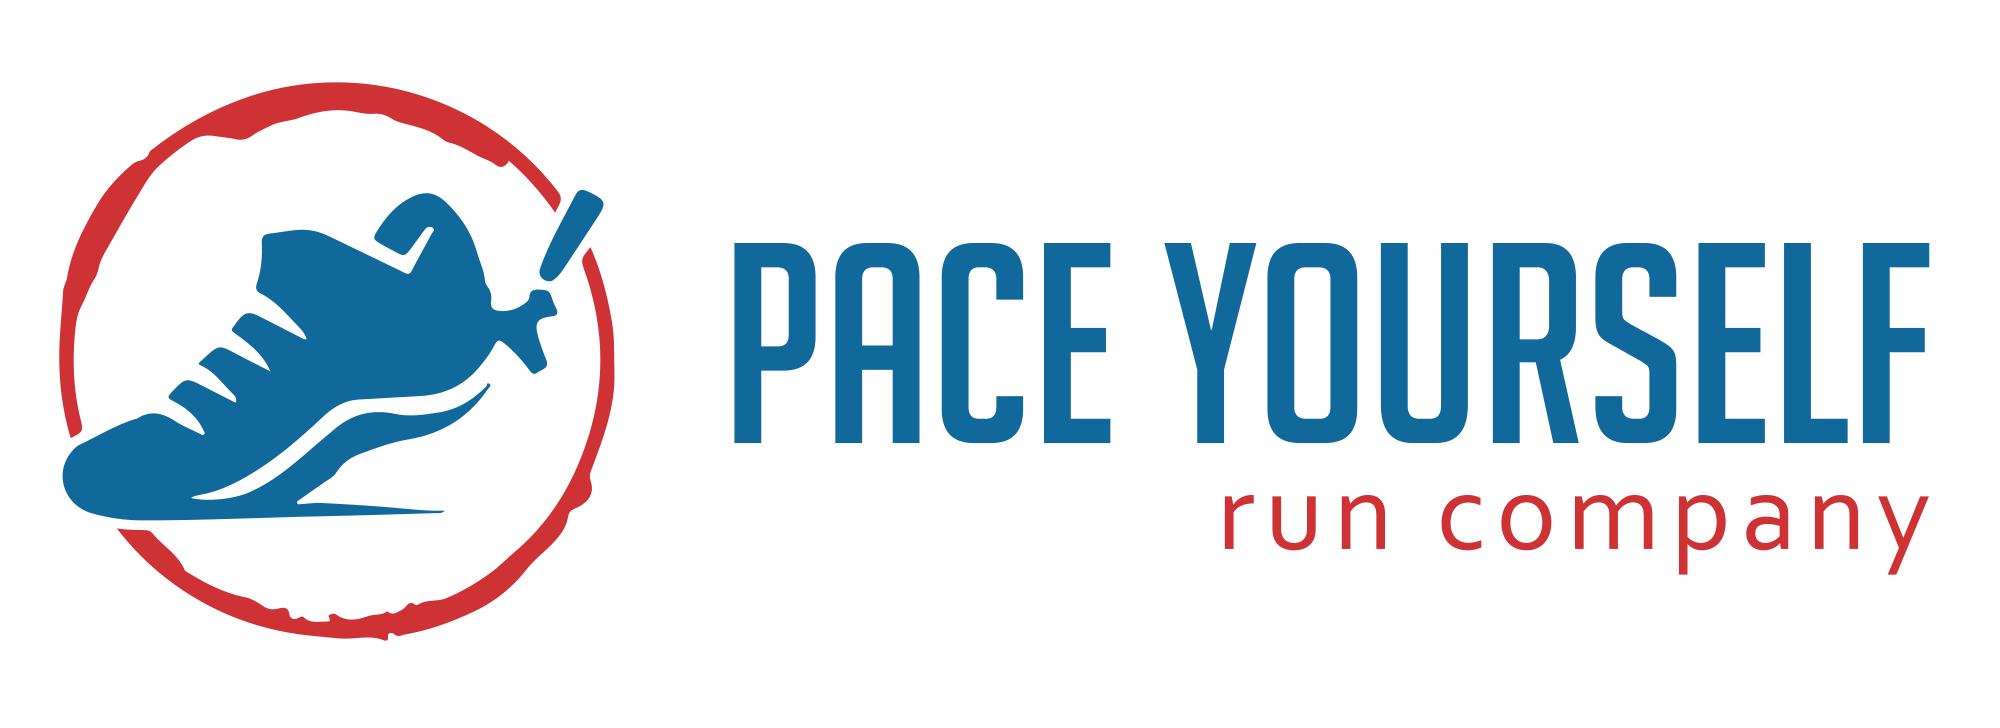 Sponsor Pace Yourself Run Company